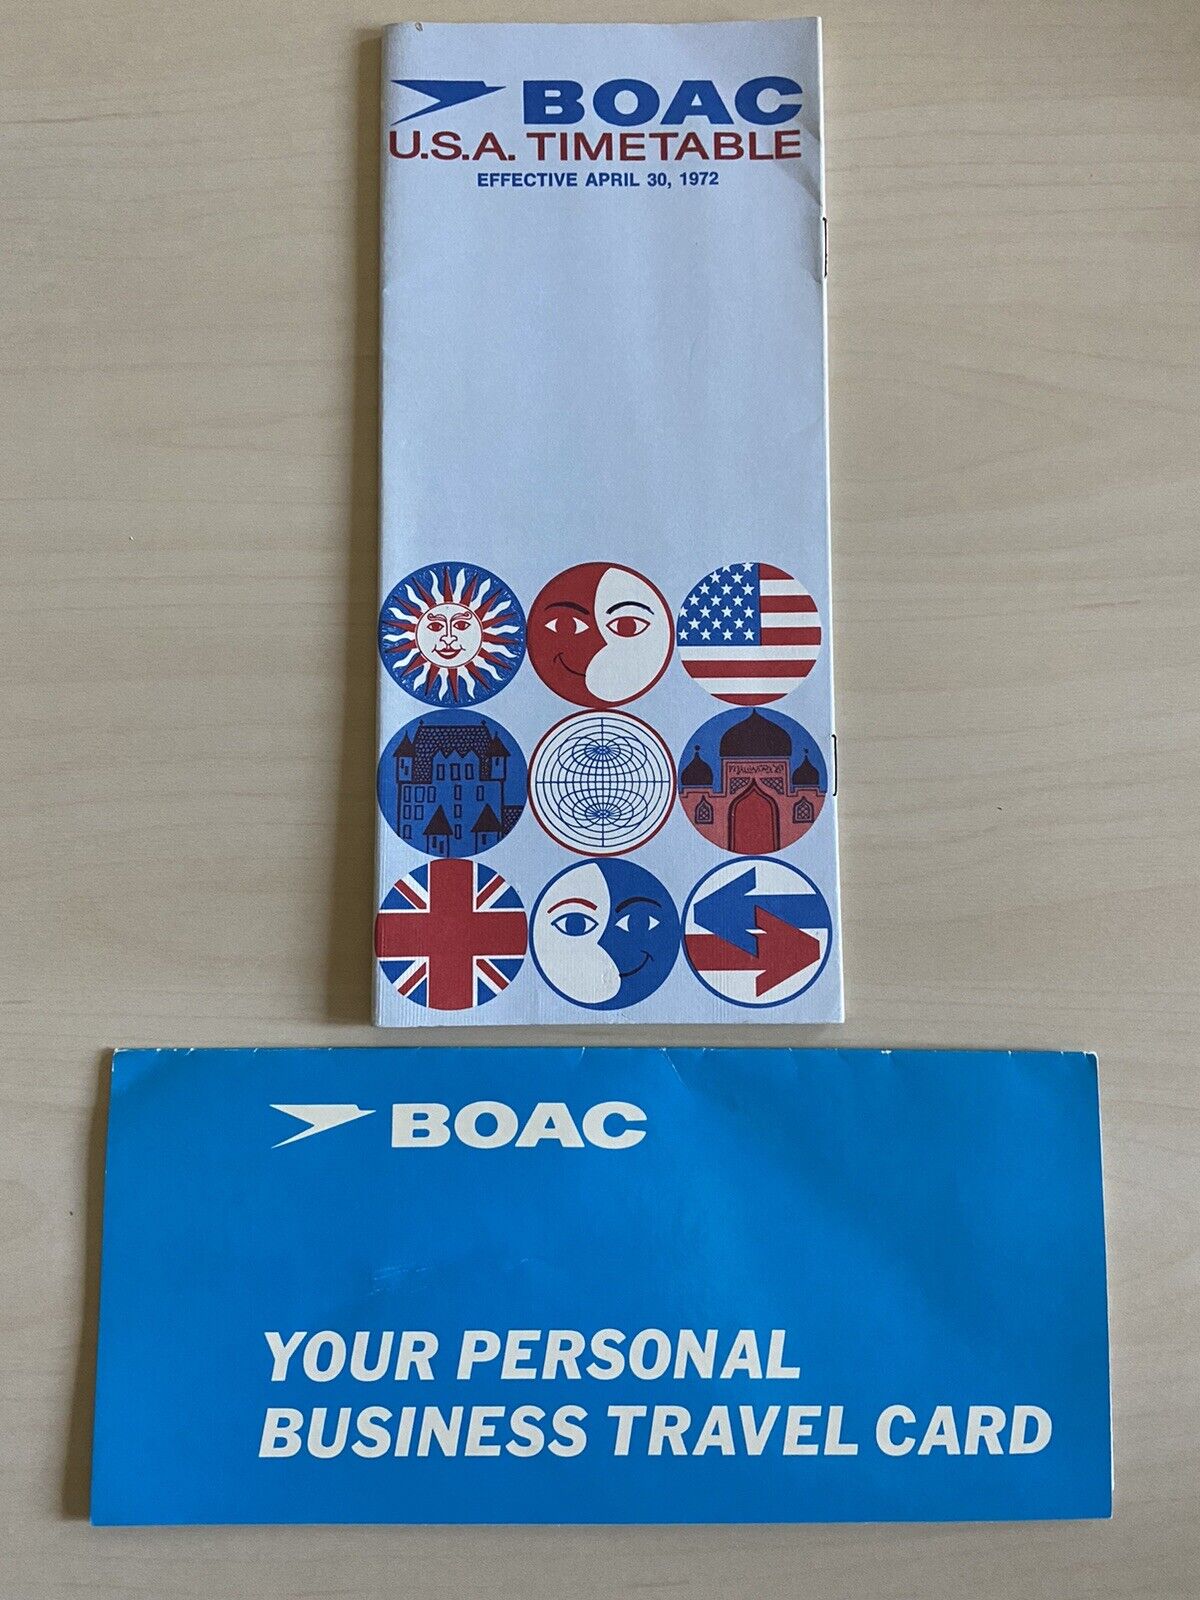 BOAC USA Timetable (April 30, 1972) and Business Travel Card Folder